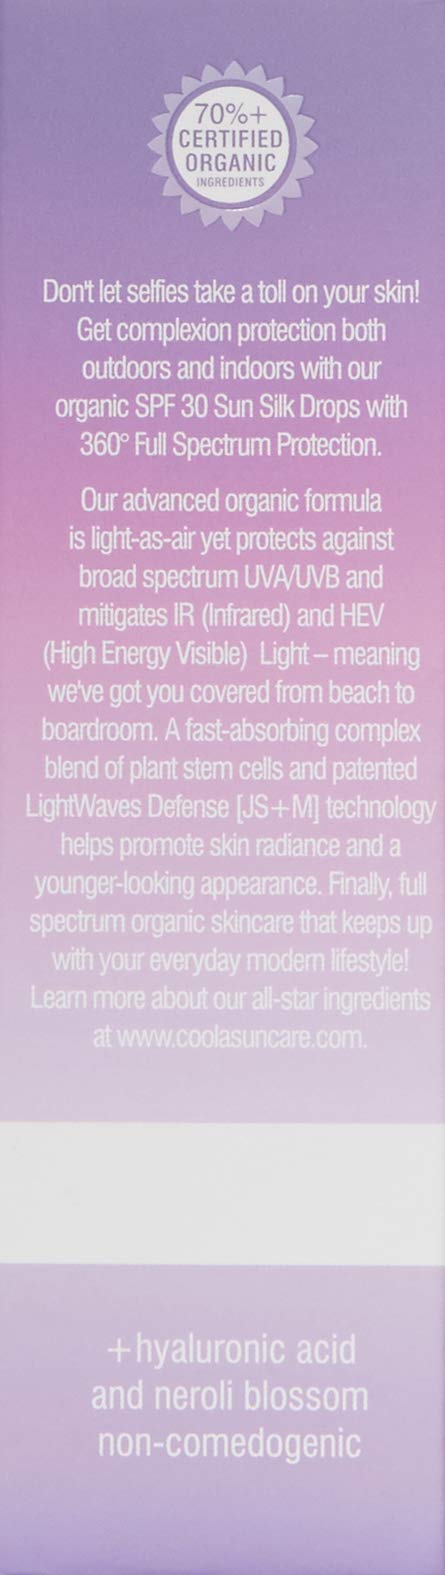 [Australia] - COOLA Organic Sunscreen Sun Silk Drops, Full Spectrum Skin Care for Digital UV Protection, Broad Spectrum SPF 30, 1 Fl Oz 